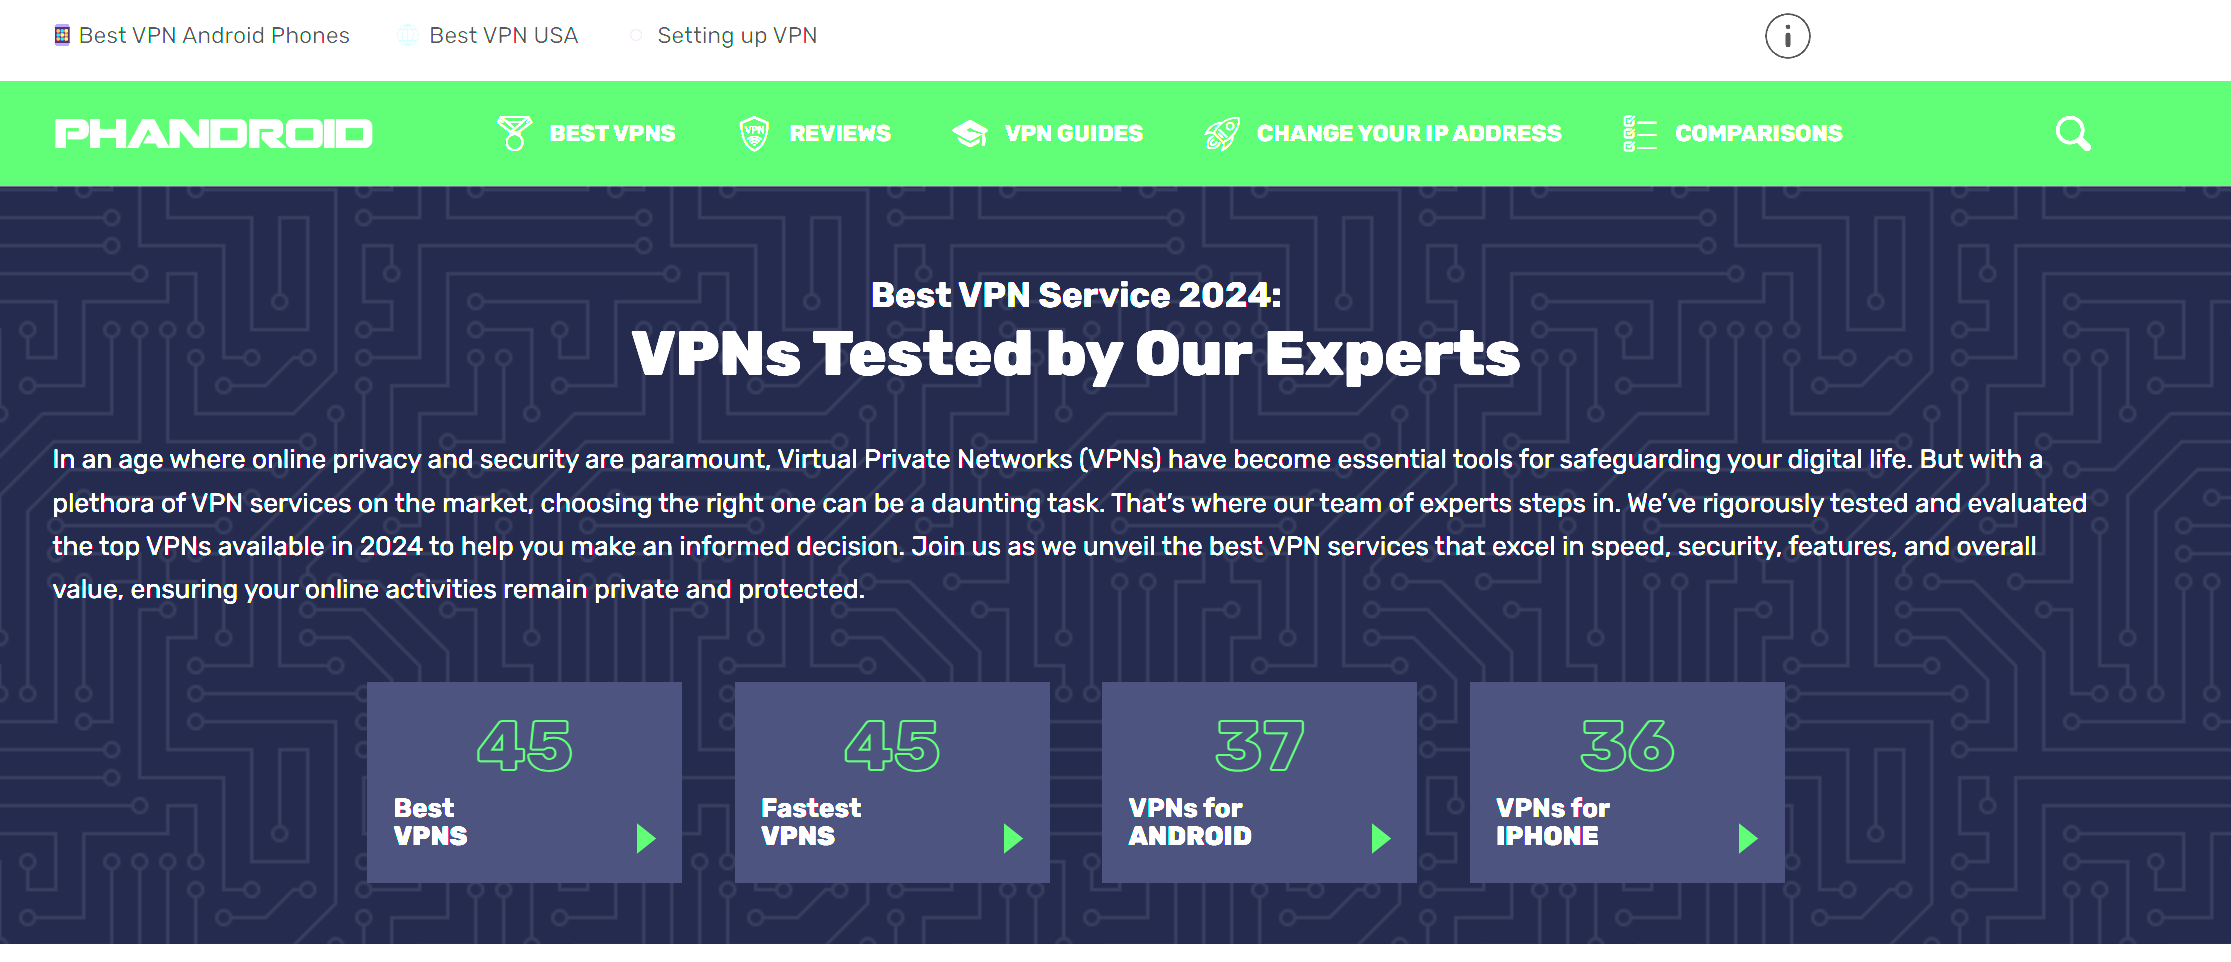 Phandroid VPN Reviews